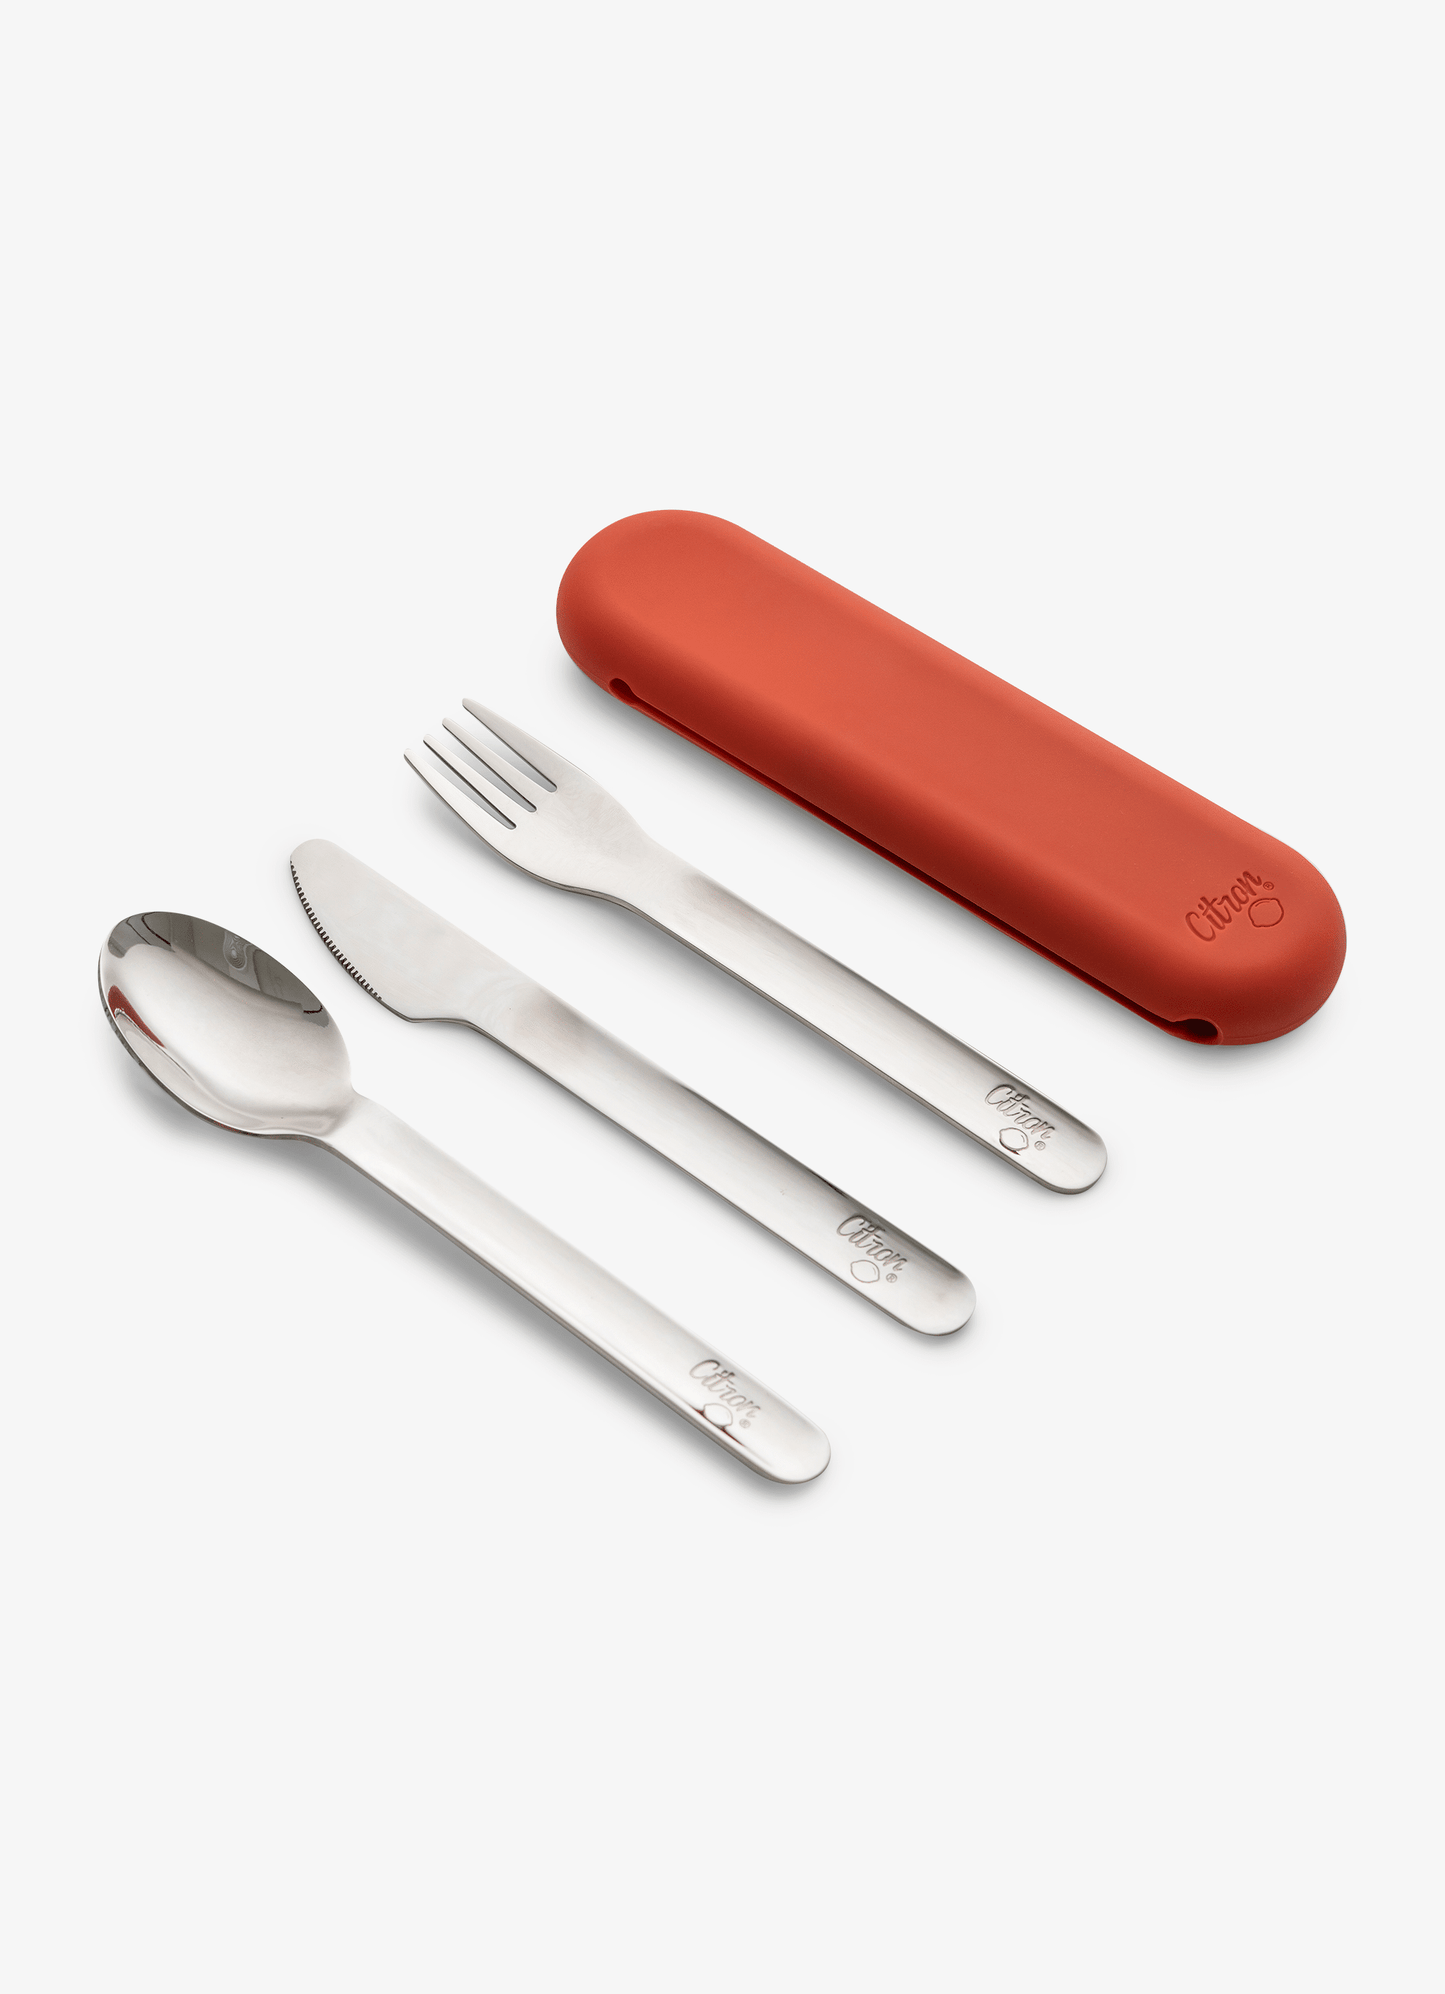 Stainless Steel Cutlery Set - Brick + Case